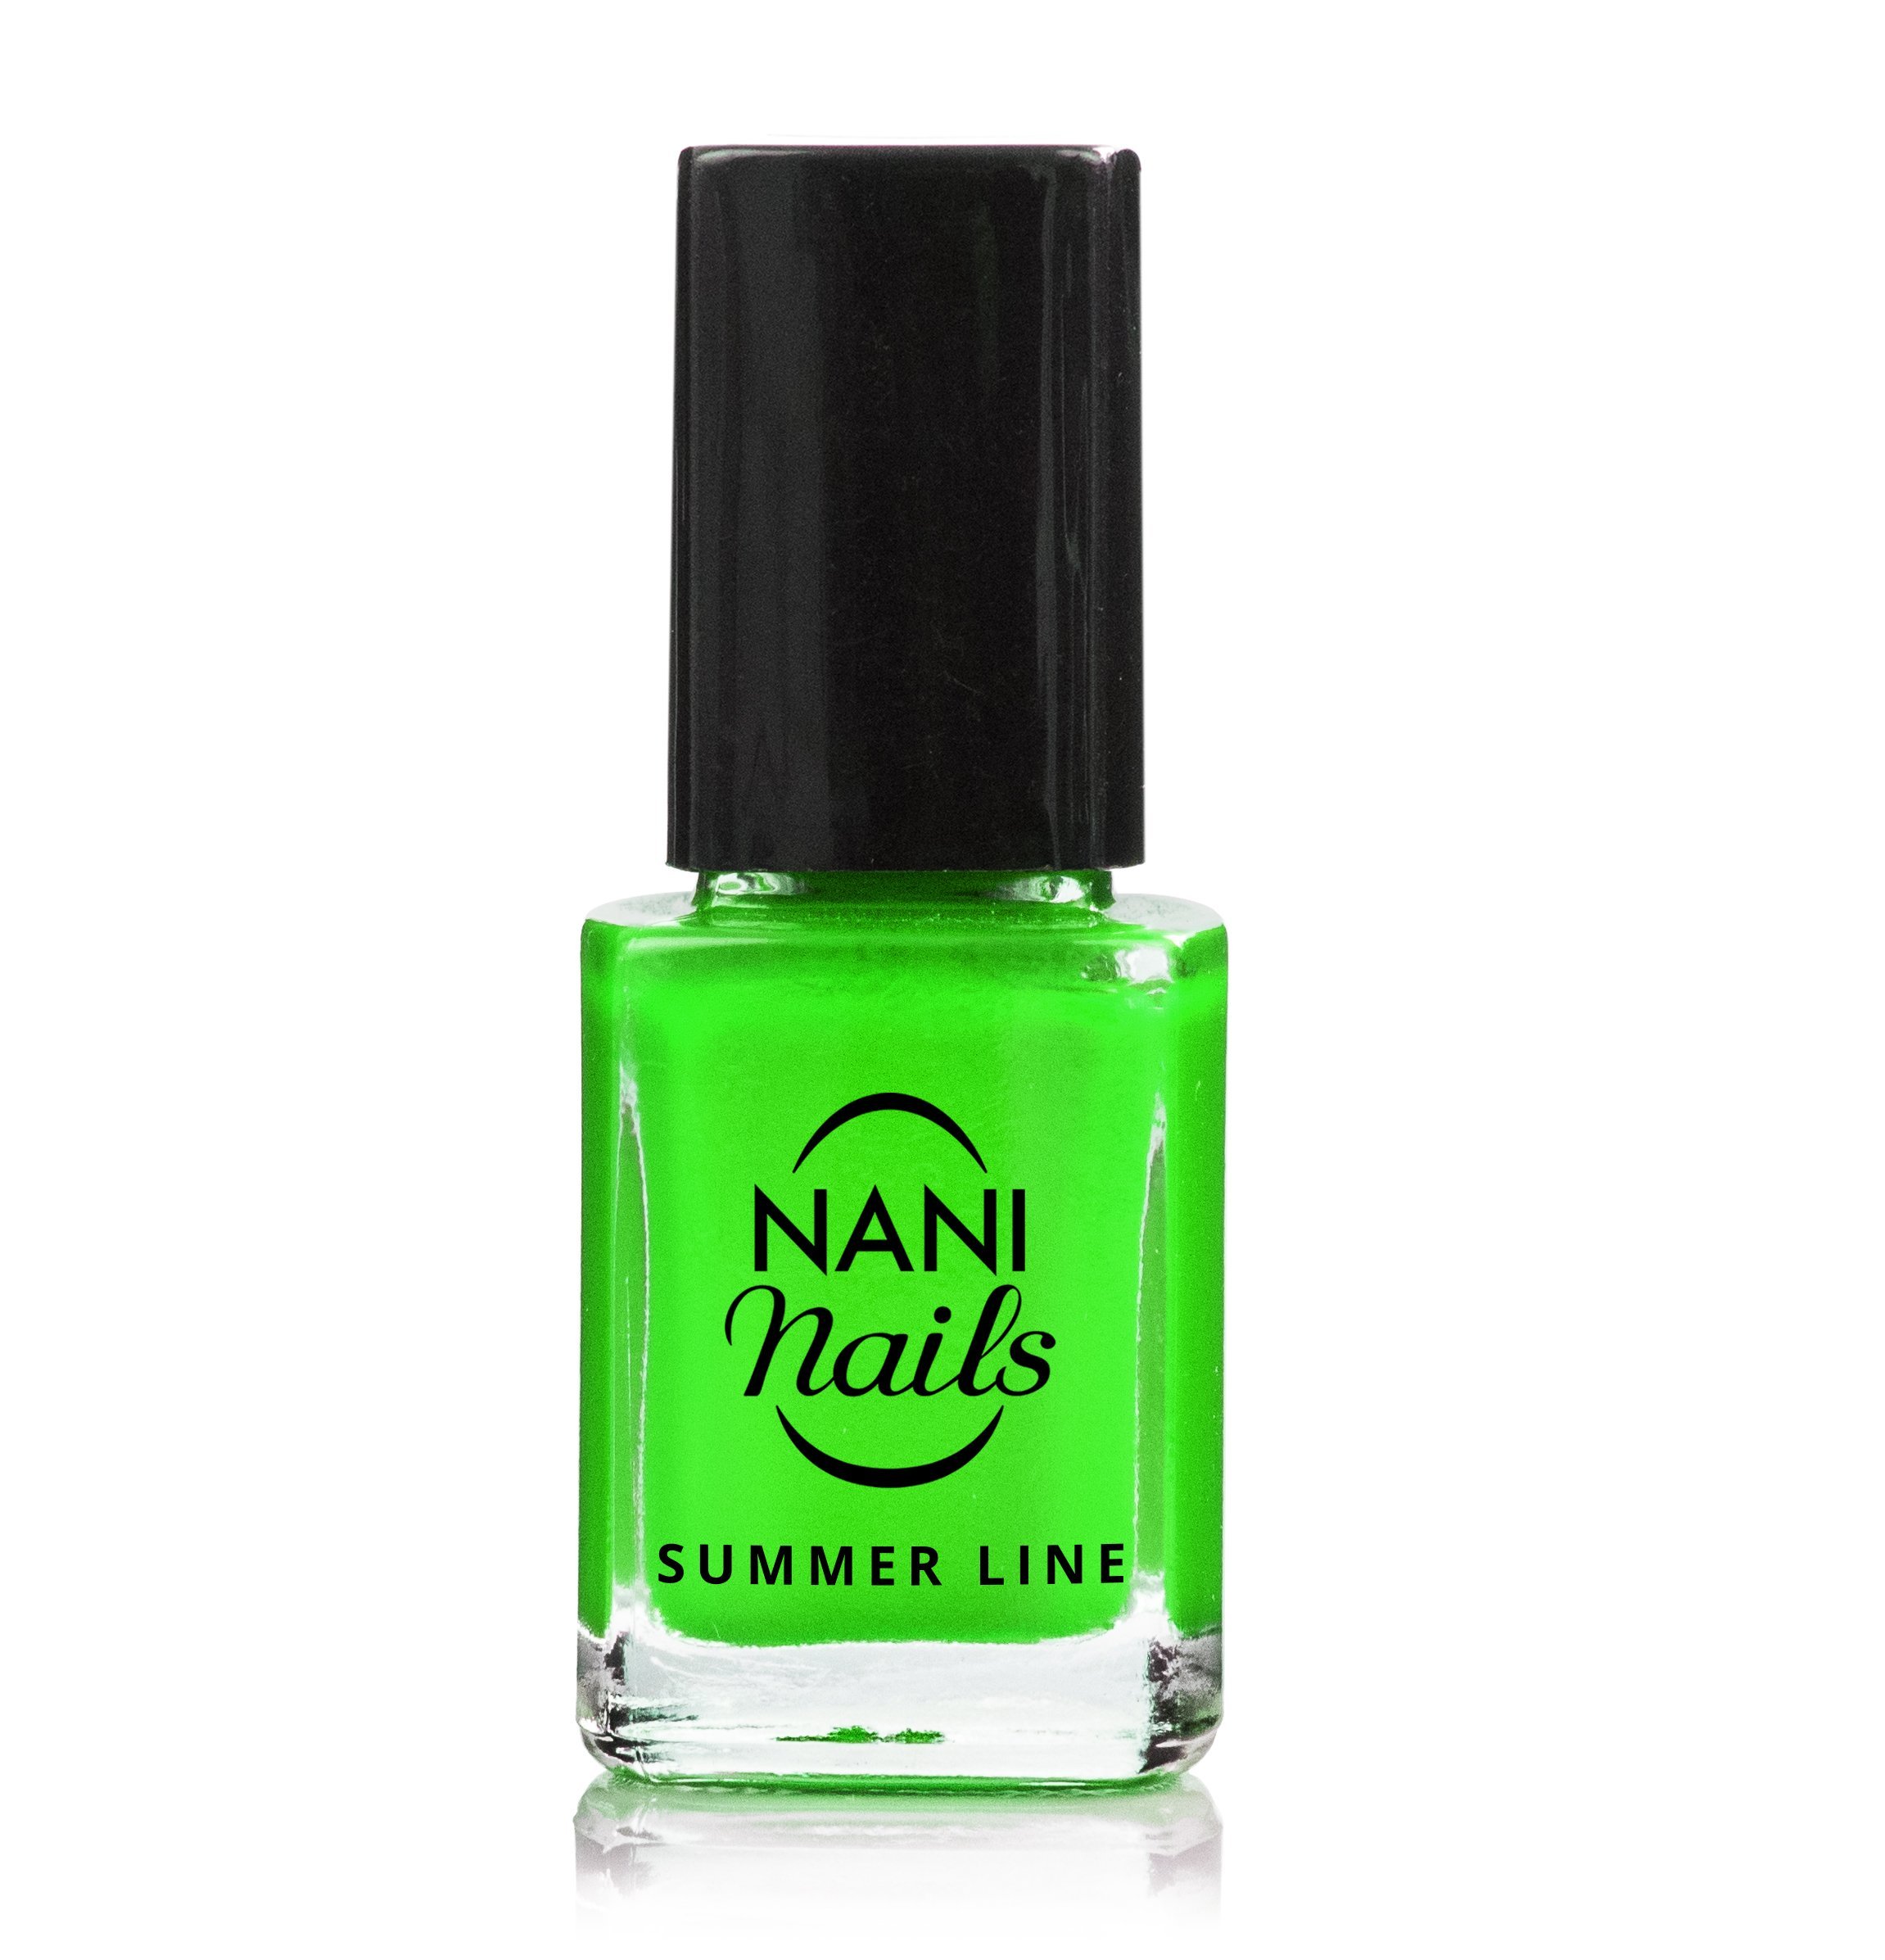 NANI lak Summer Line 12 ml - Neon Green